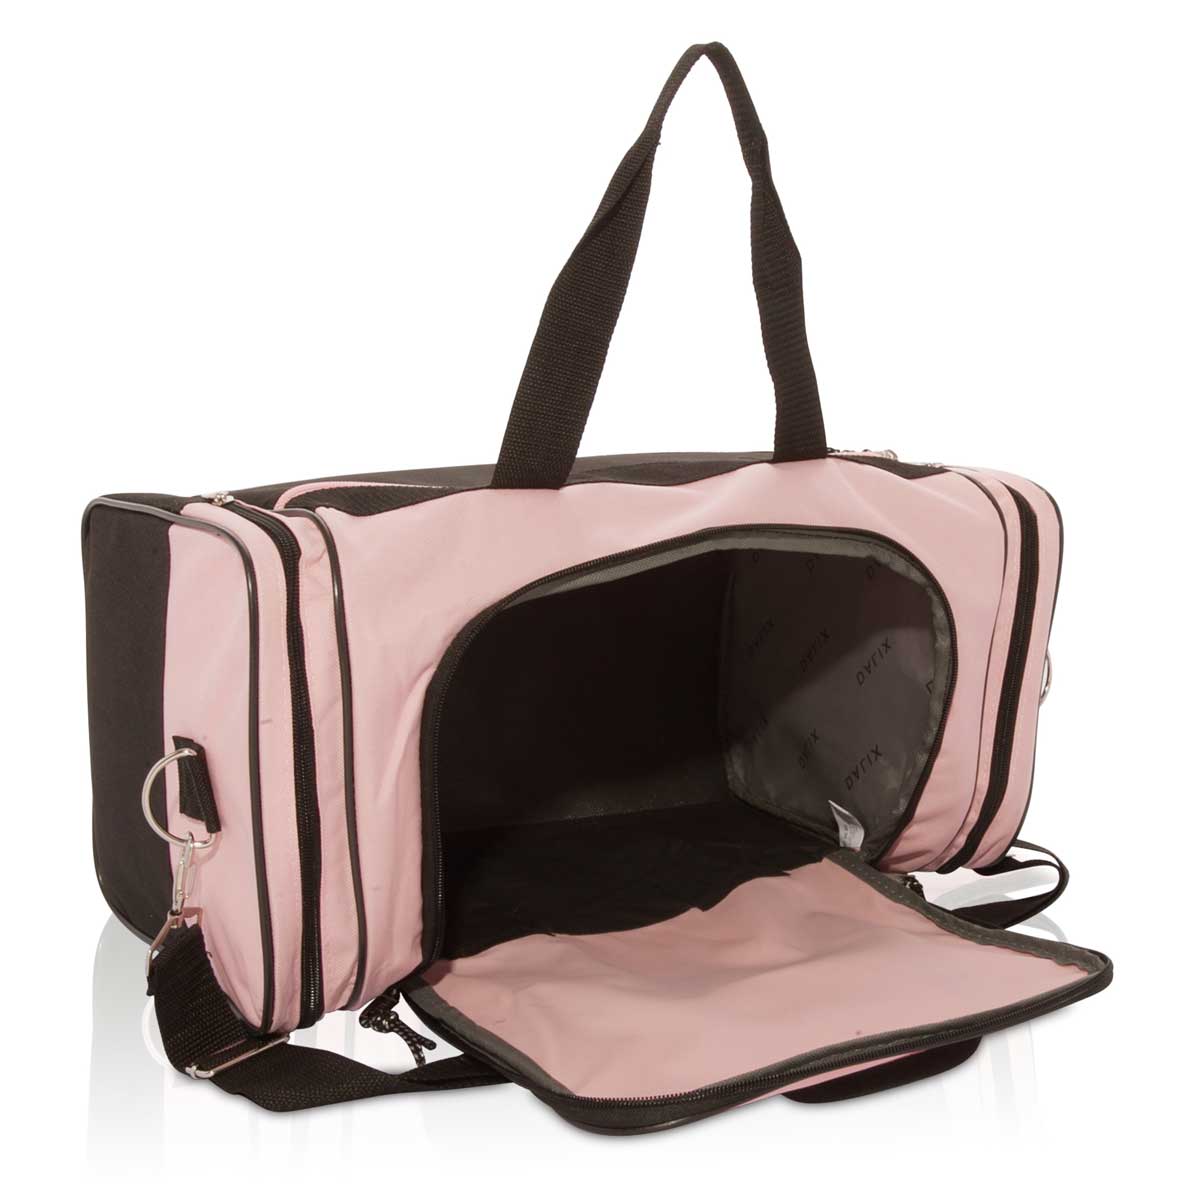 Dalix 17 inch Blank Duffel Bag Duffle Travel Size Sports Durable Gym Bag in Pink/Black, Women's, Size: Medium